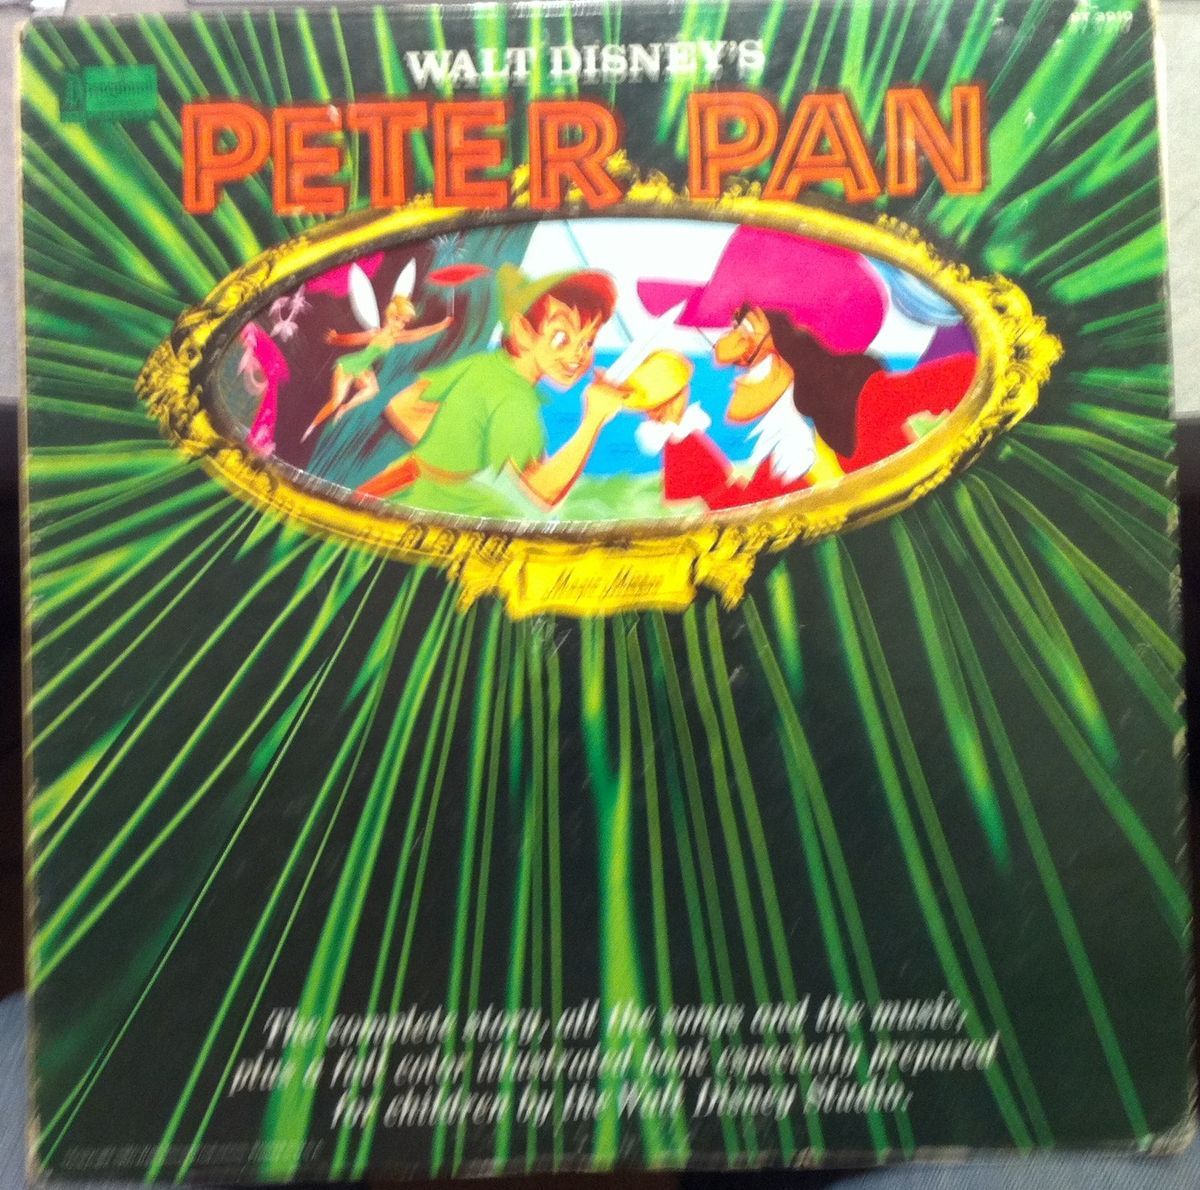 Magic Mirror Walt Disney Peter Pan LP VG St 3910 Vinyl 1962 Record